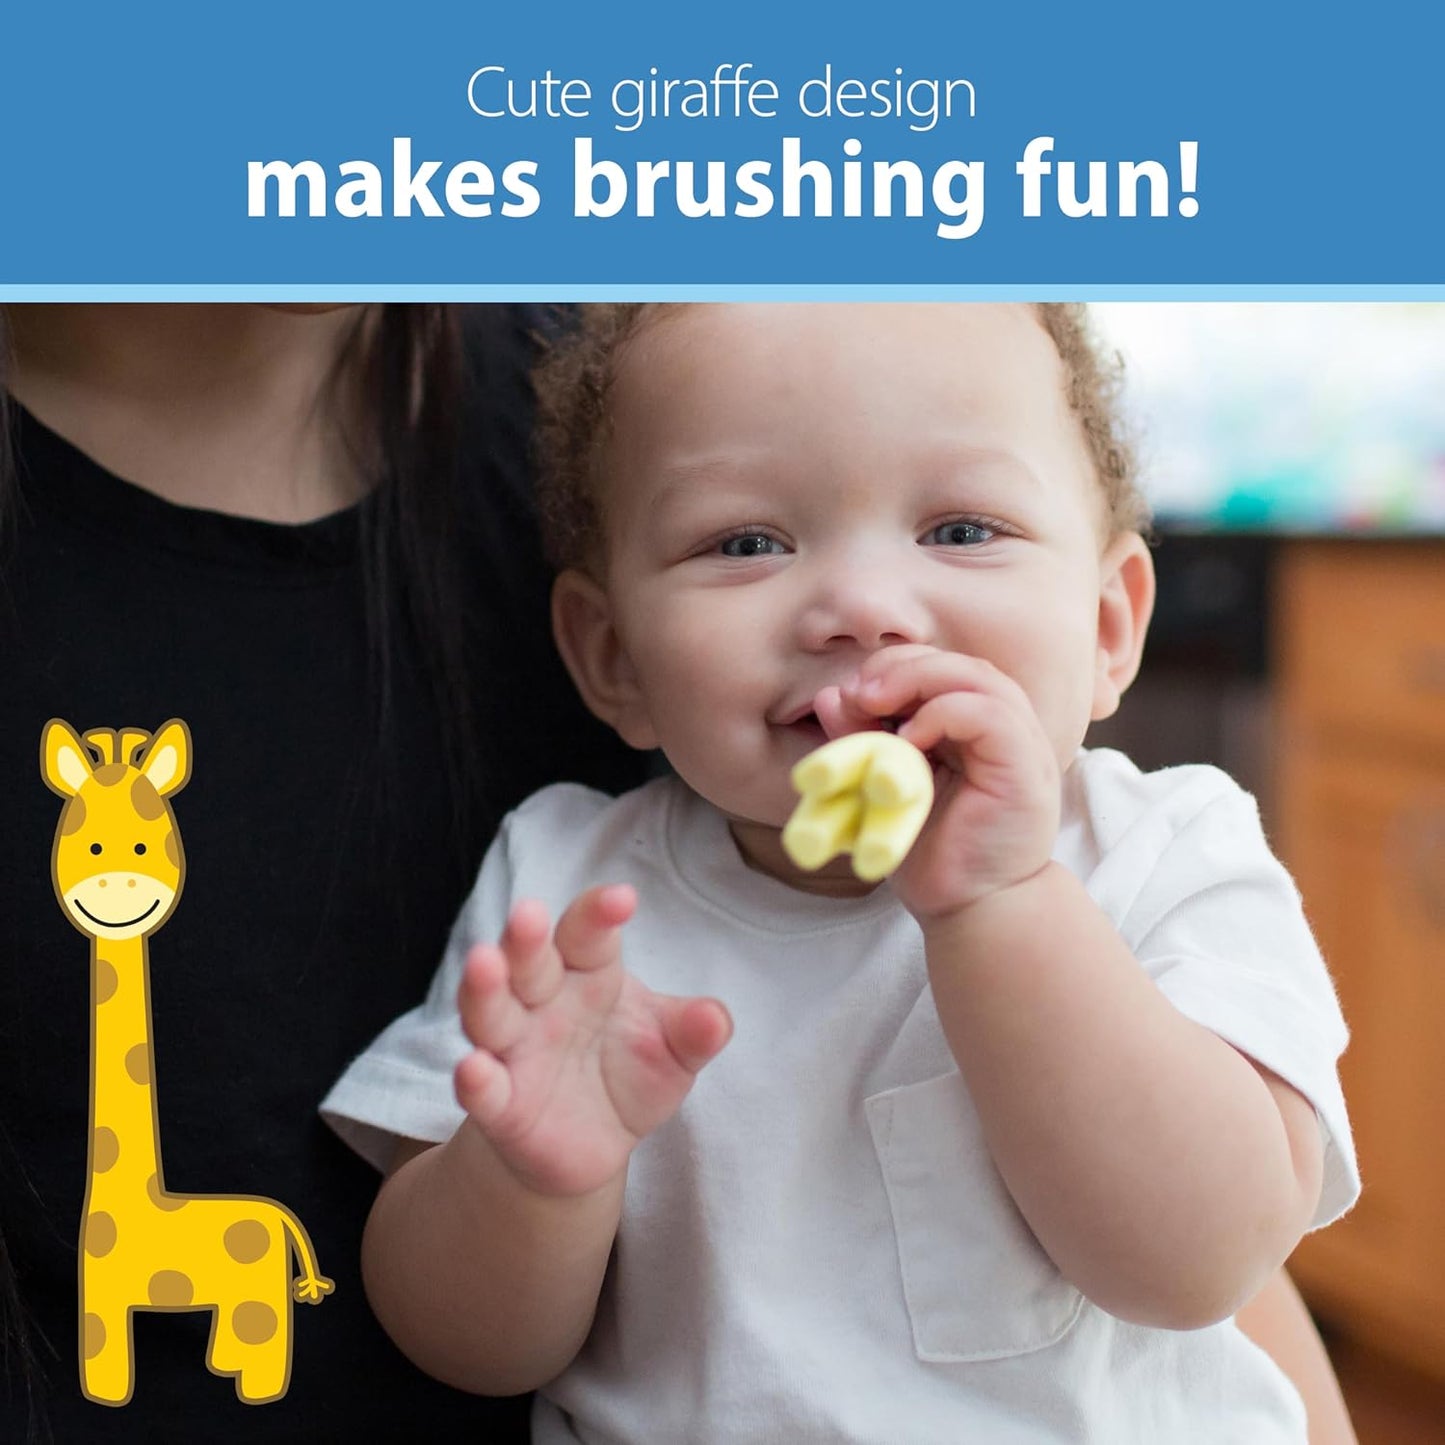 Dr. Brown's Infant-To-Toddler Toothbrush - Giraffe